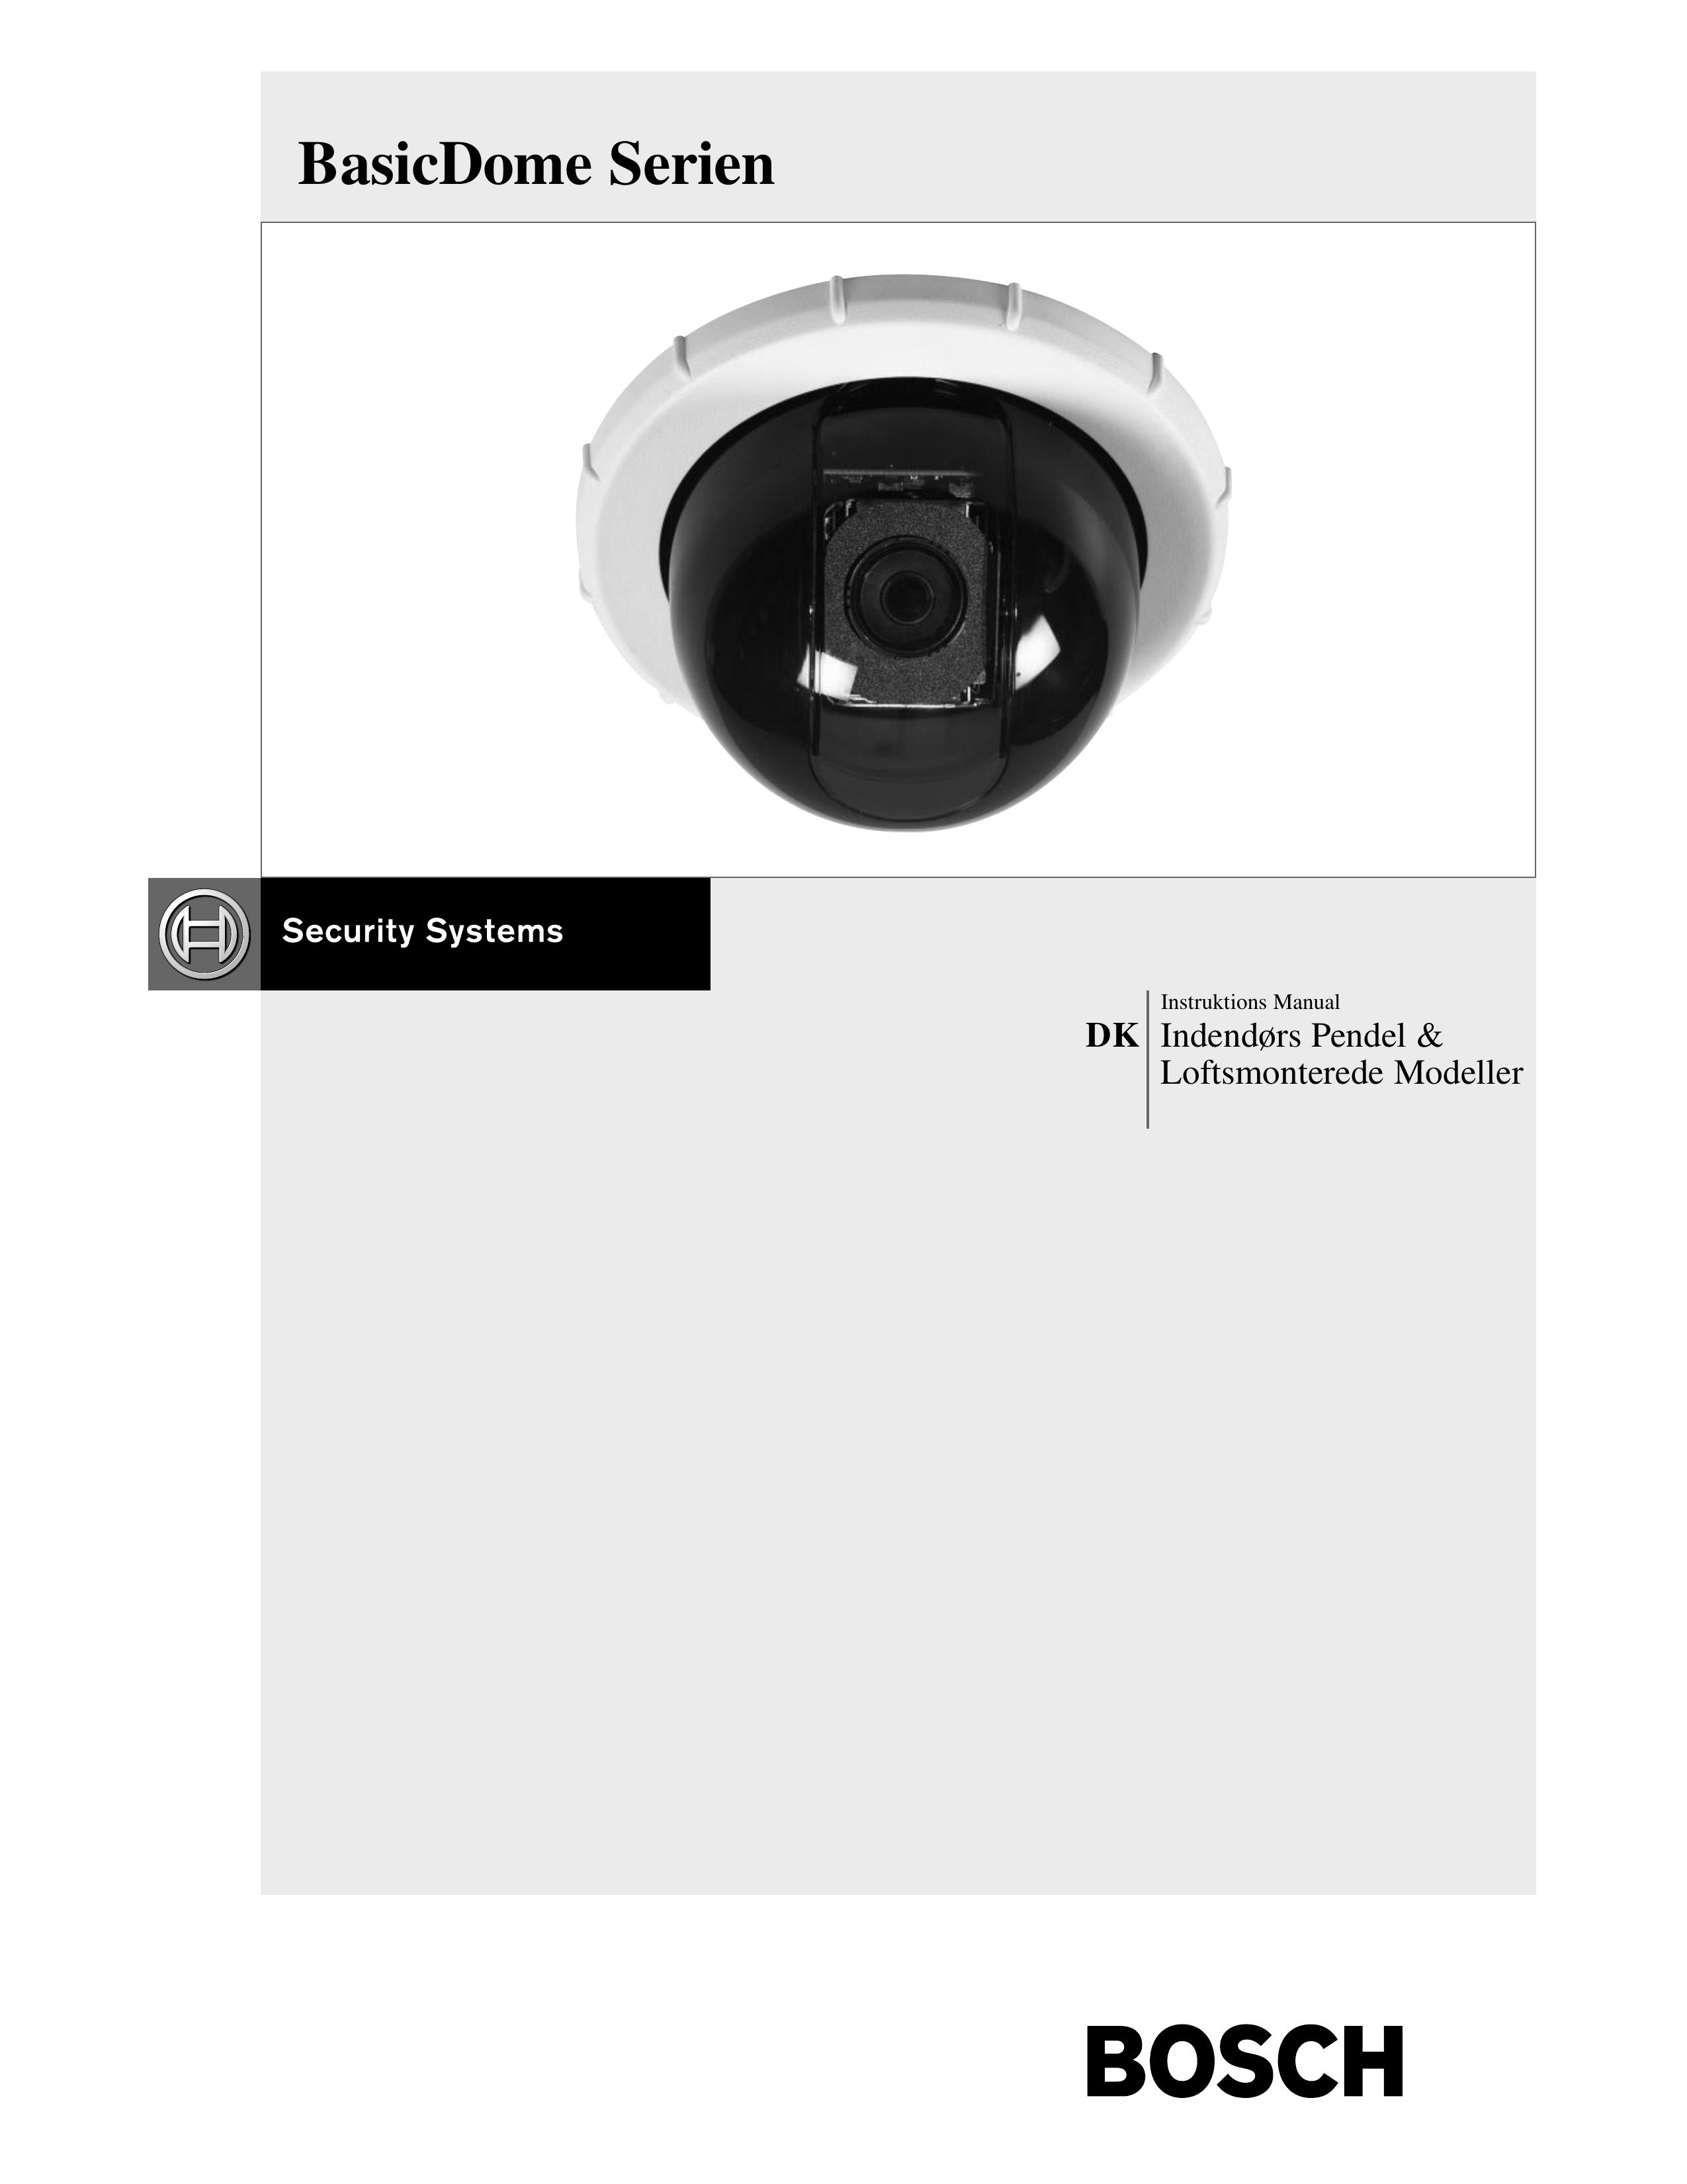 Bosch Appliances BasicDome Serien Security Camera User Manual